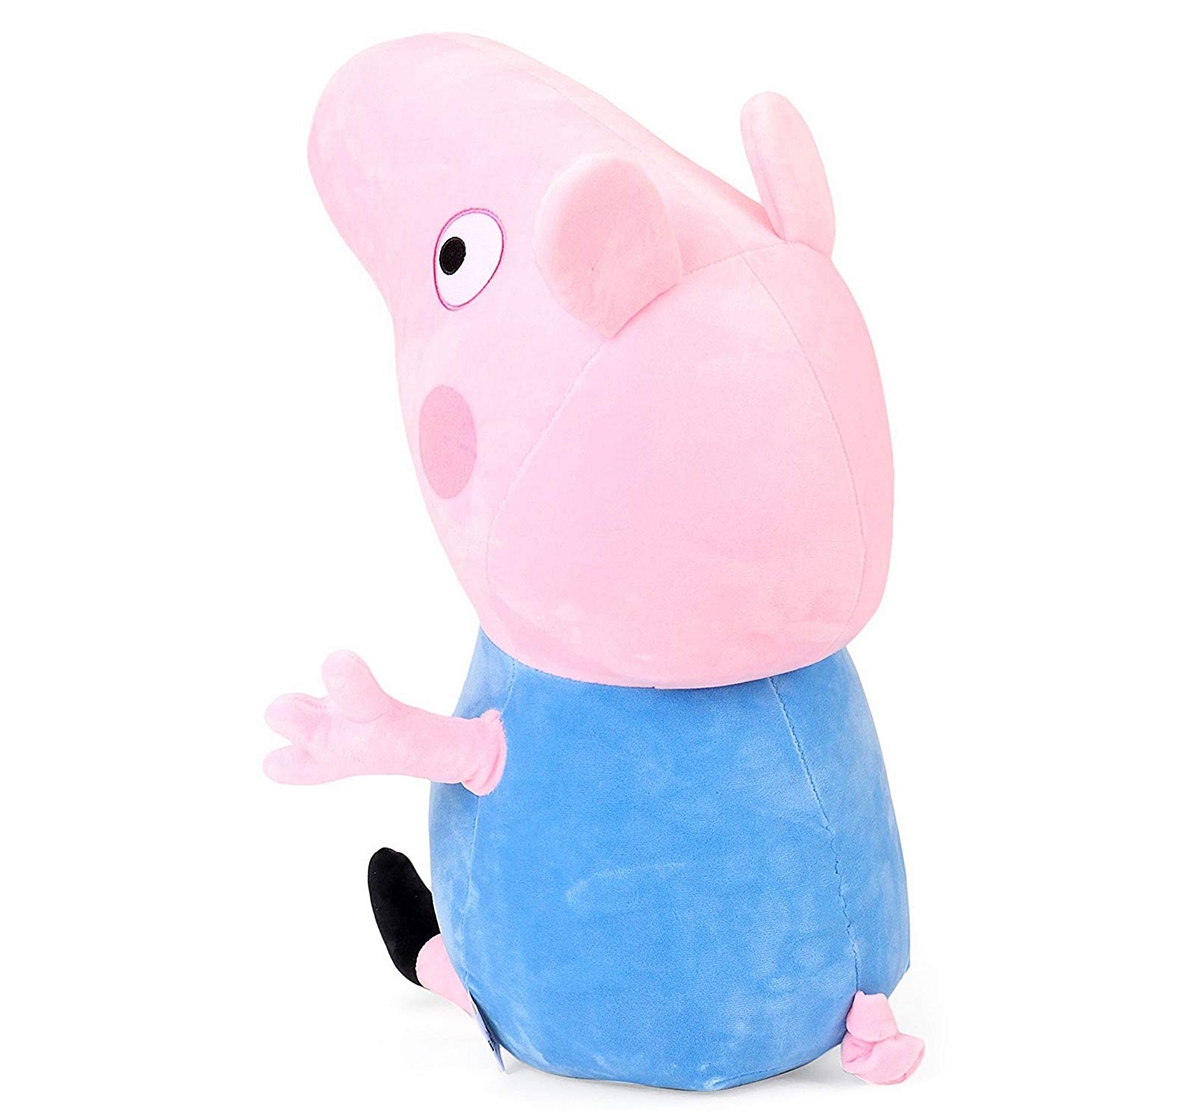 Peppa Pig | Peppa George Pig  Multi Color 46 Cm Soft Toy for Kids age 0M+ (Blue) 4